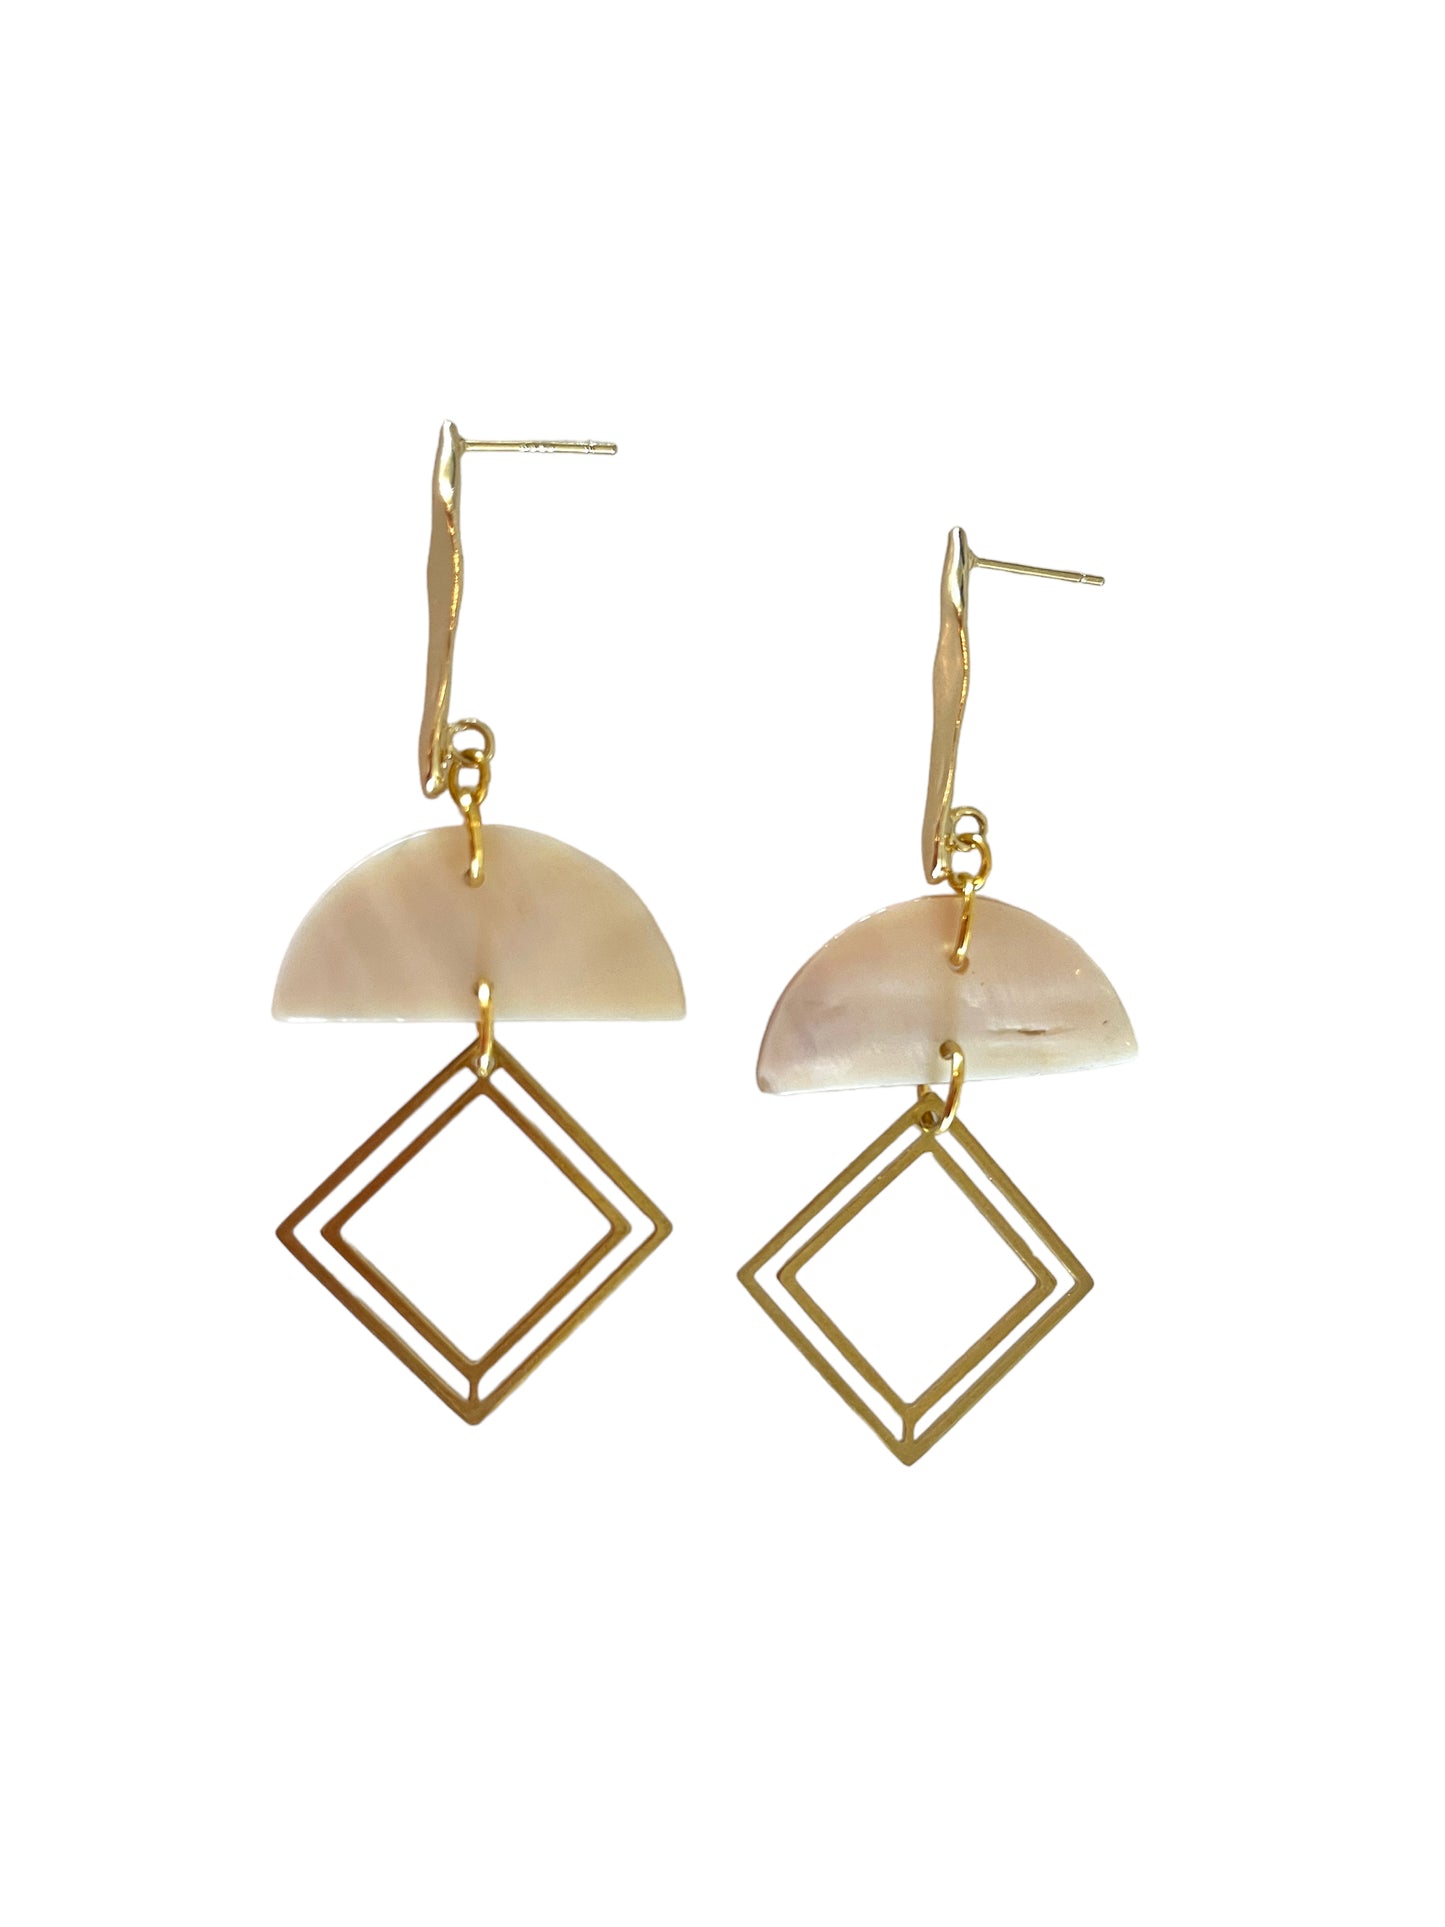 Brass diamond earrings - bar top